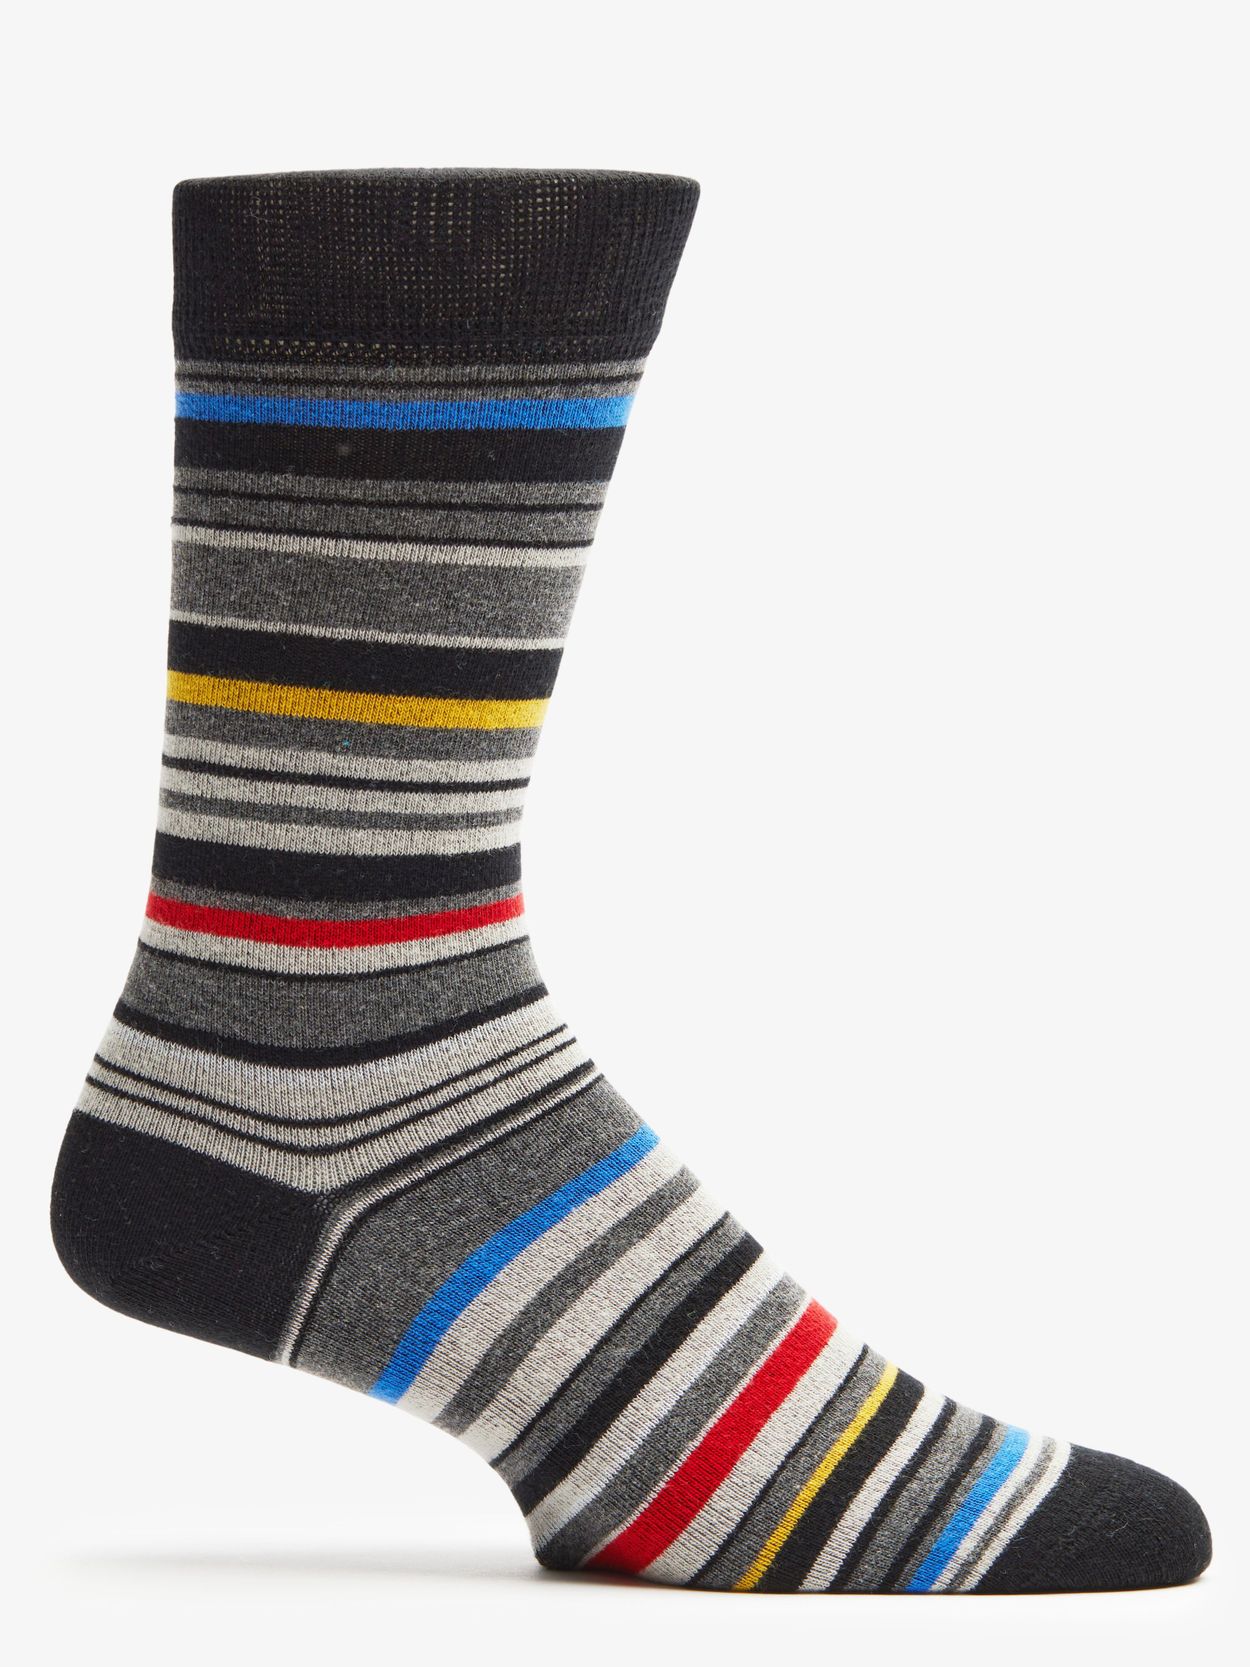 Black Socks Newport